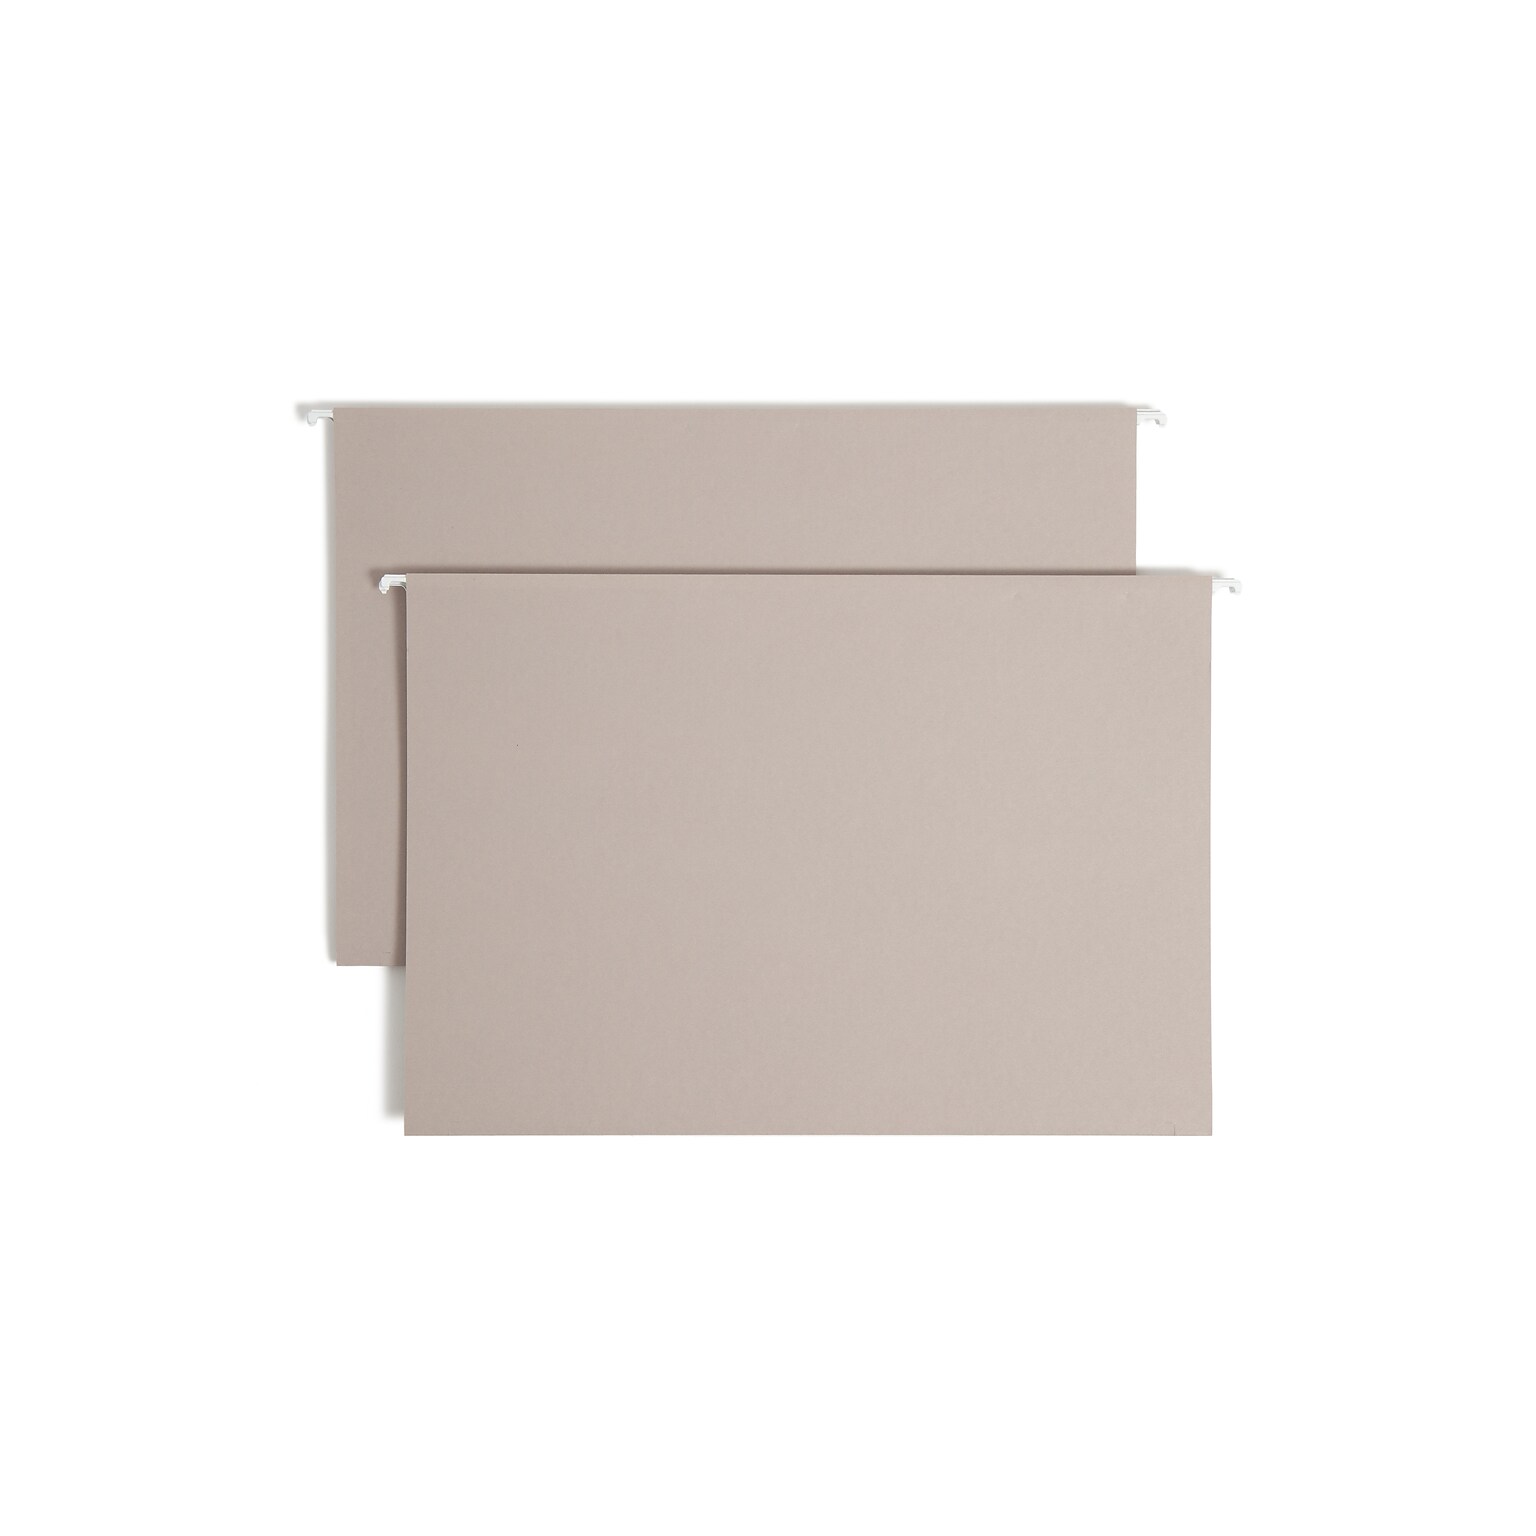 Smead Heavy Duty TUFF Hanging File Folders with Easy Slide™ Tab, 1/3 Cut, Legal Size, Steel Gray, 18/Box (64340)